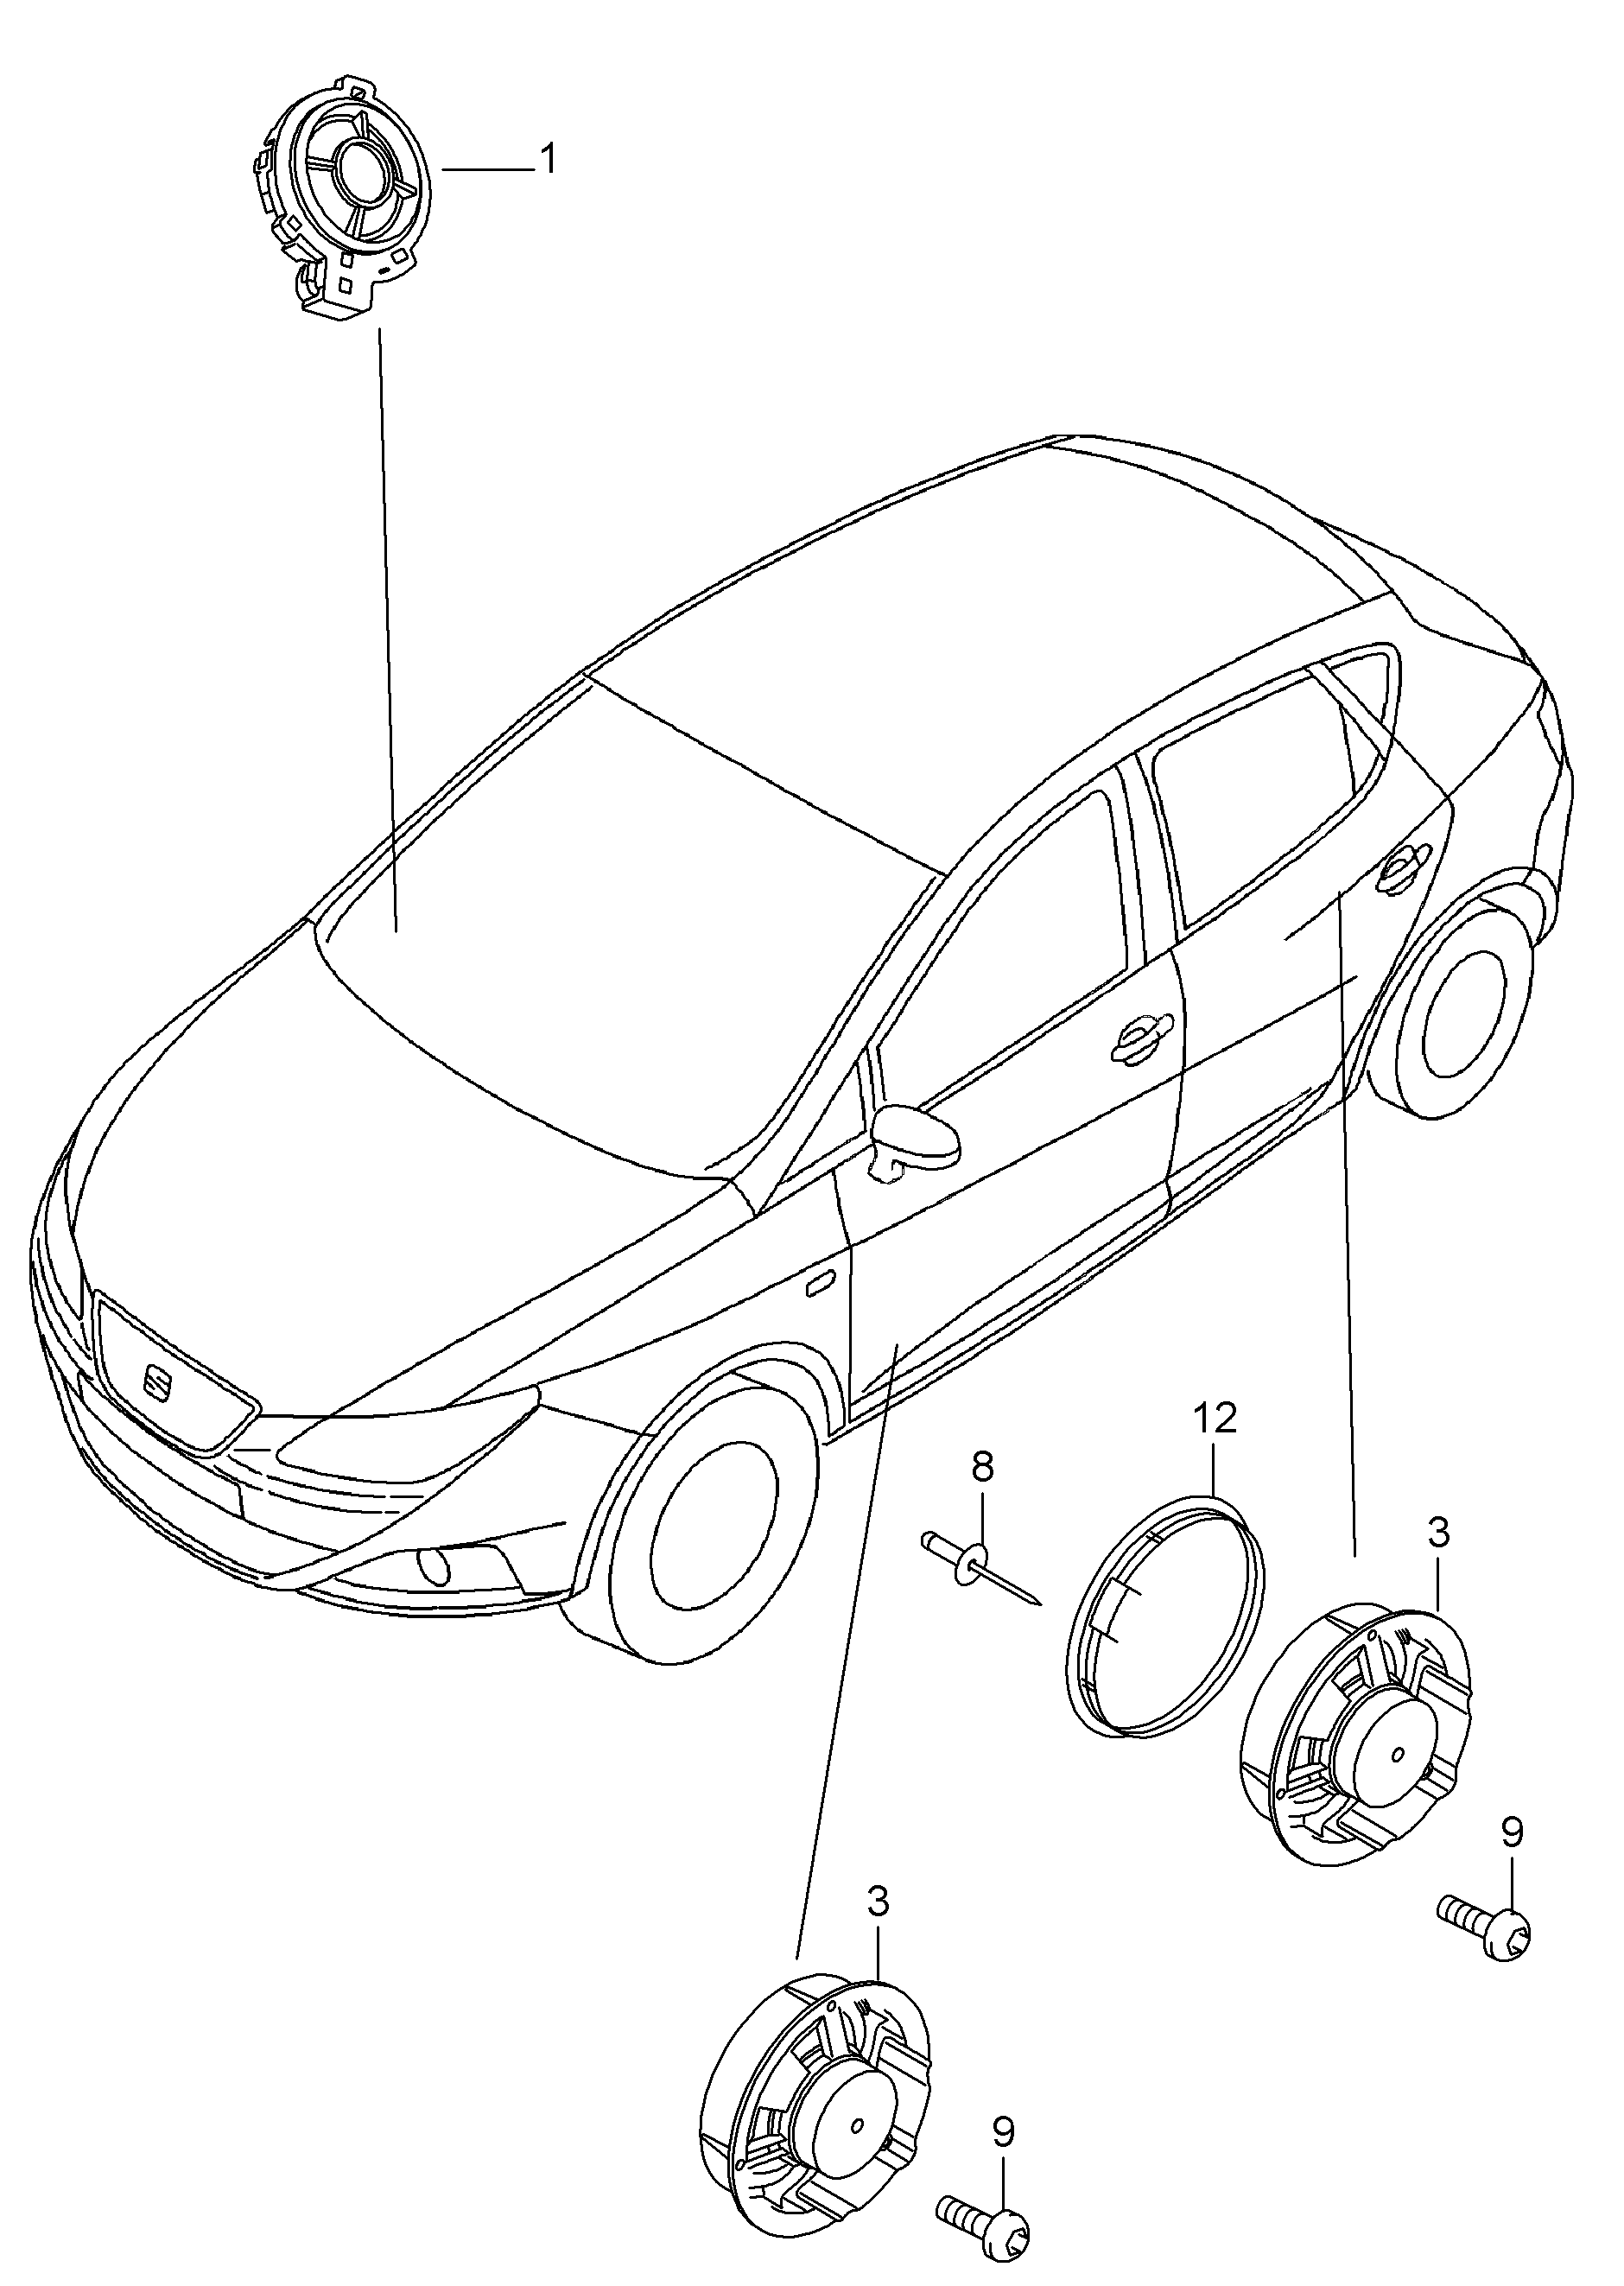 loudspeaker; for vehicles with 6
loudspeakers - Ibiza/ST(IB)  